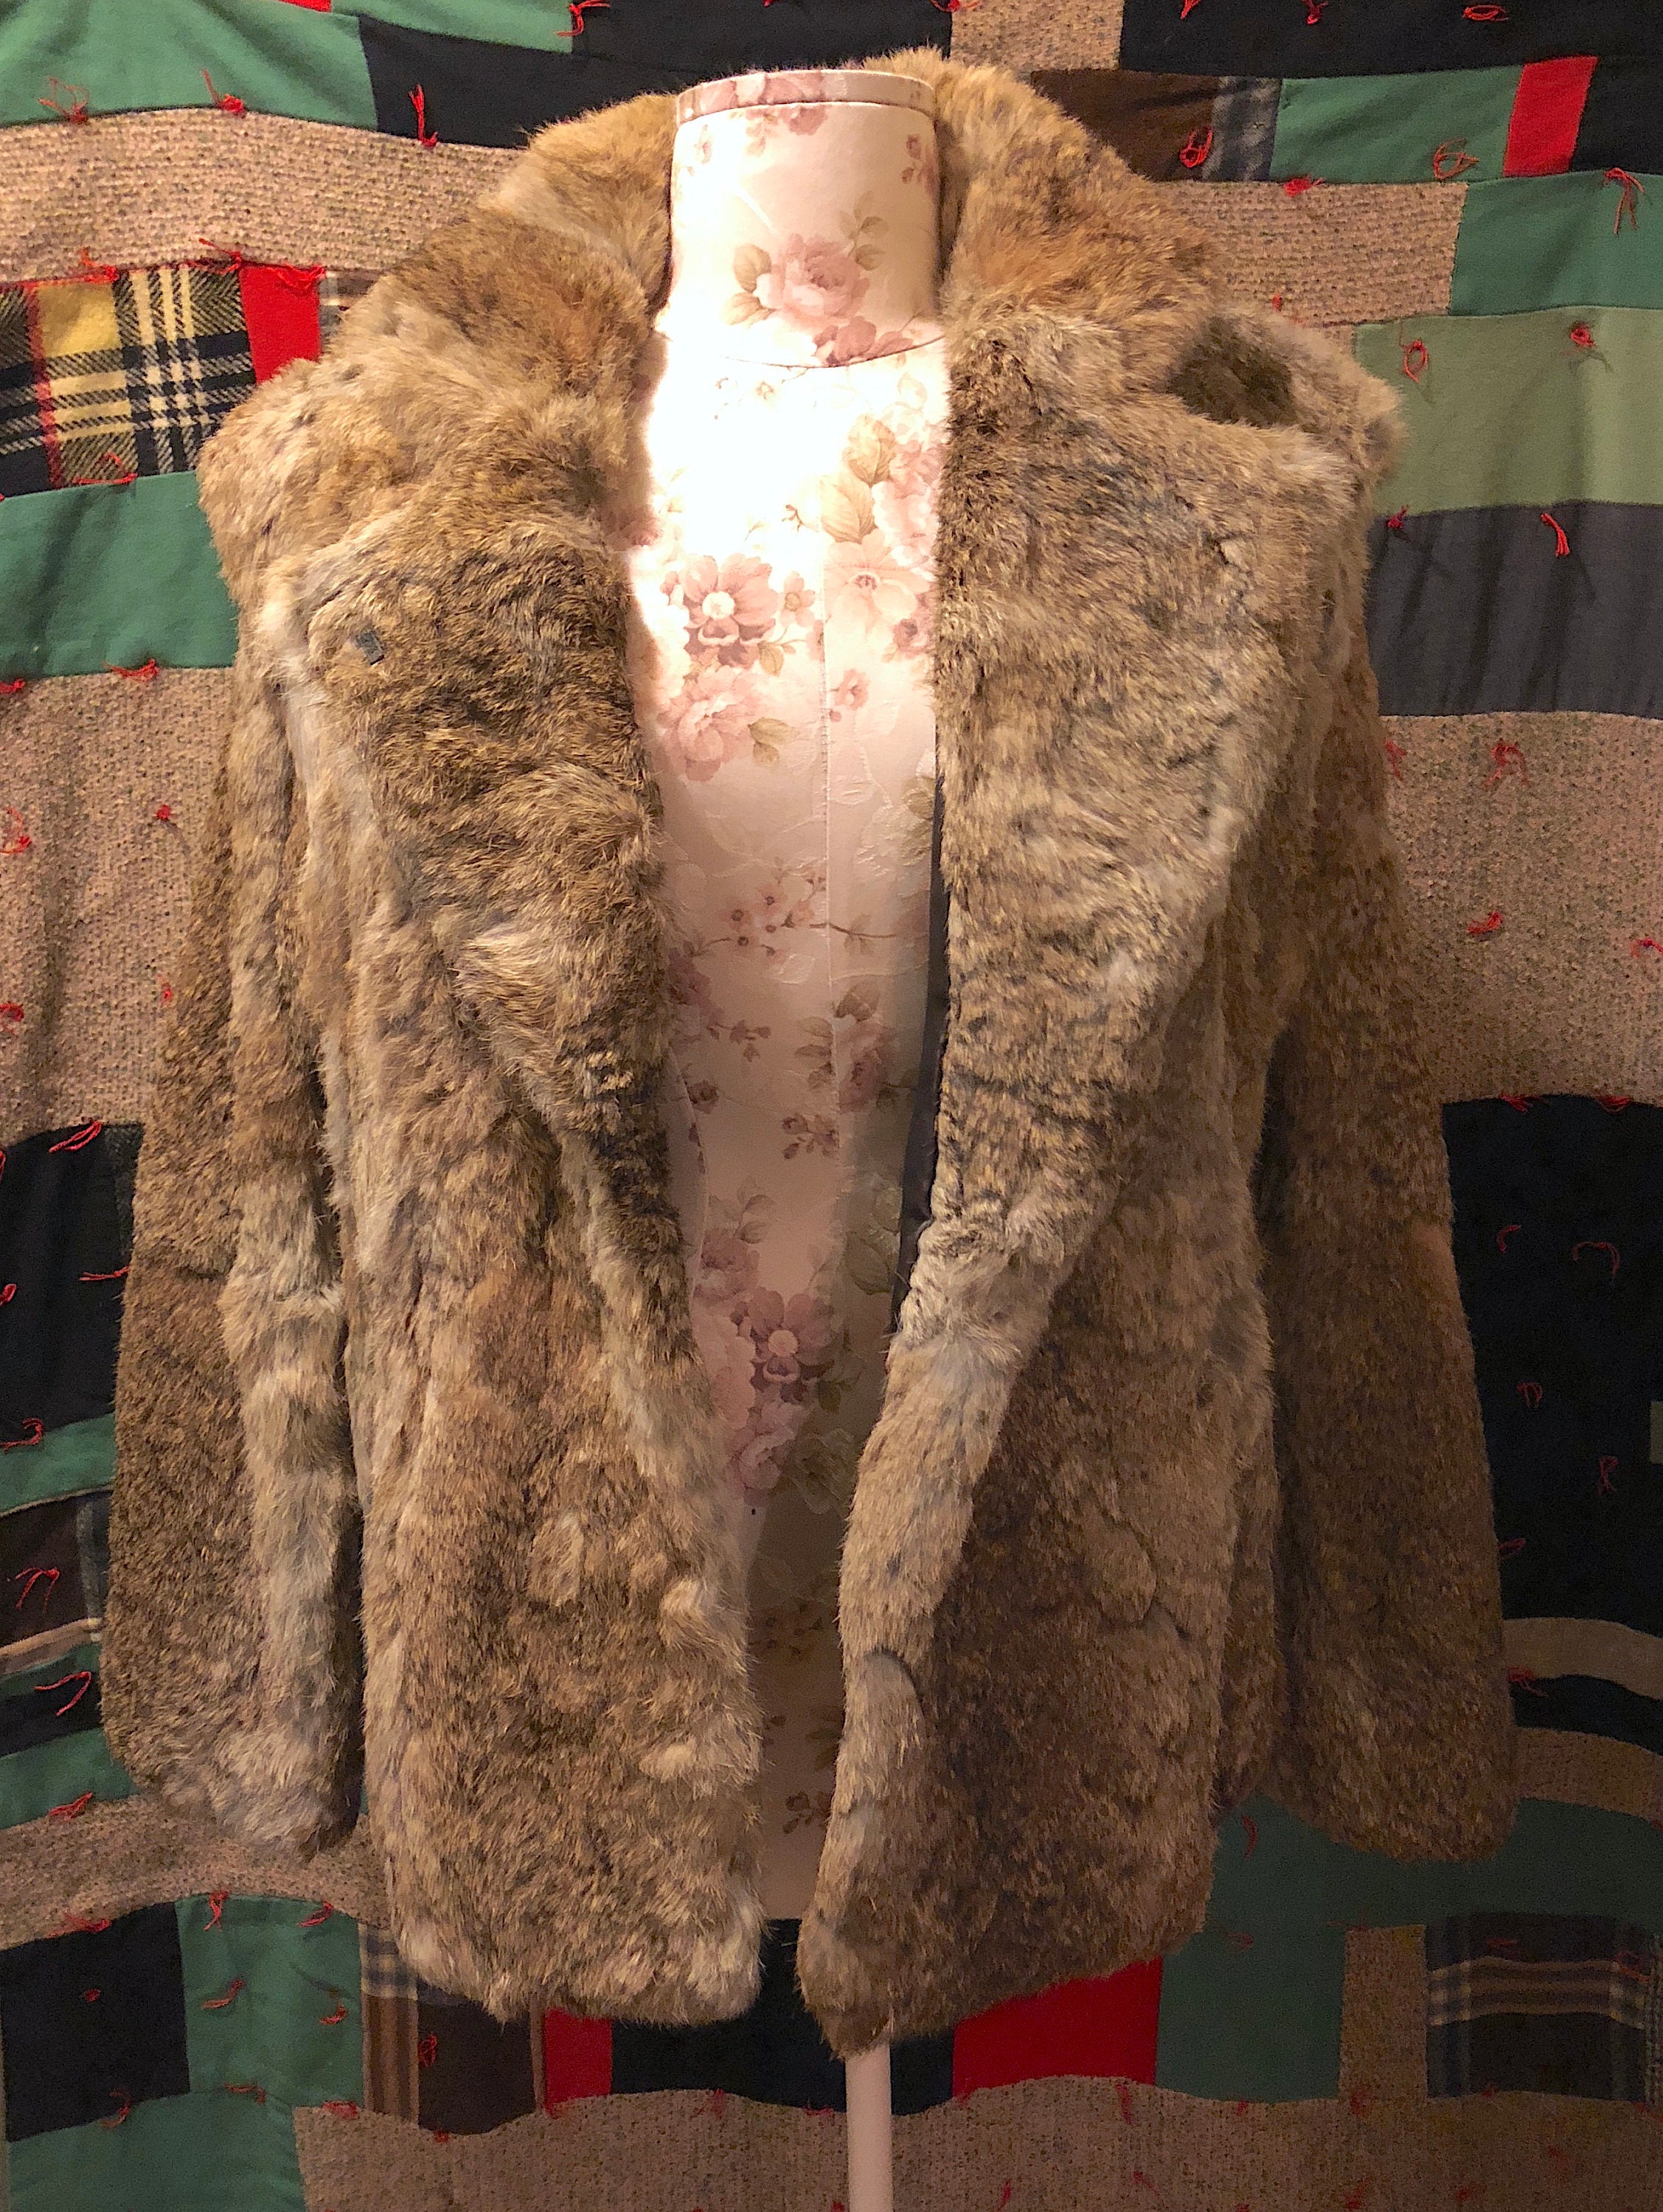 Vintage, 1980's, Fur Coat, Rabbit Fur, J.S.L. Ii, Creamy White, Jutted  Shoulders, Waist Length 